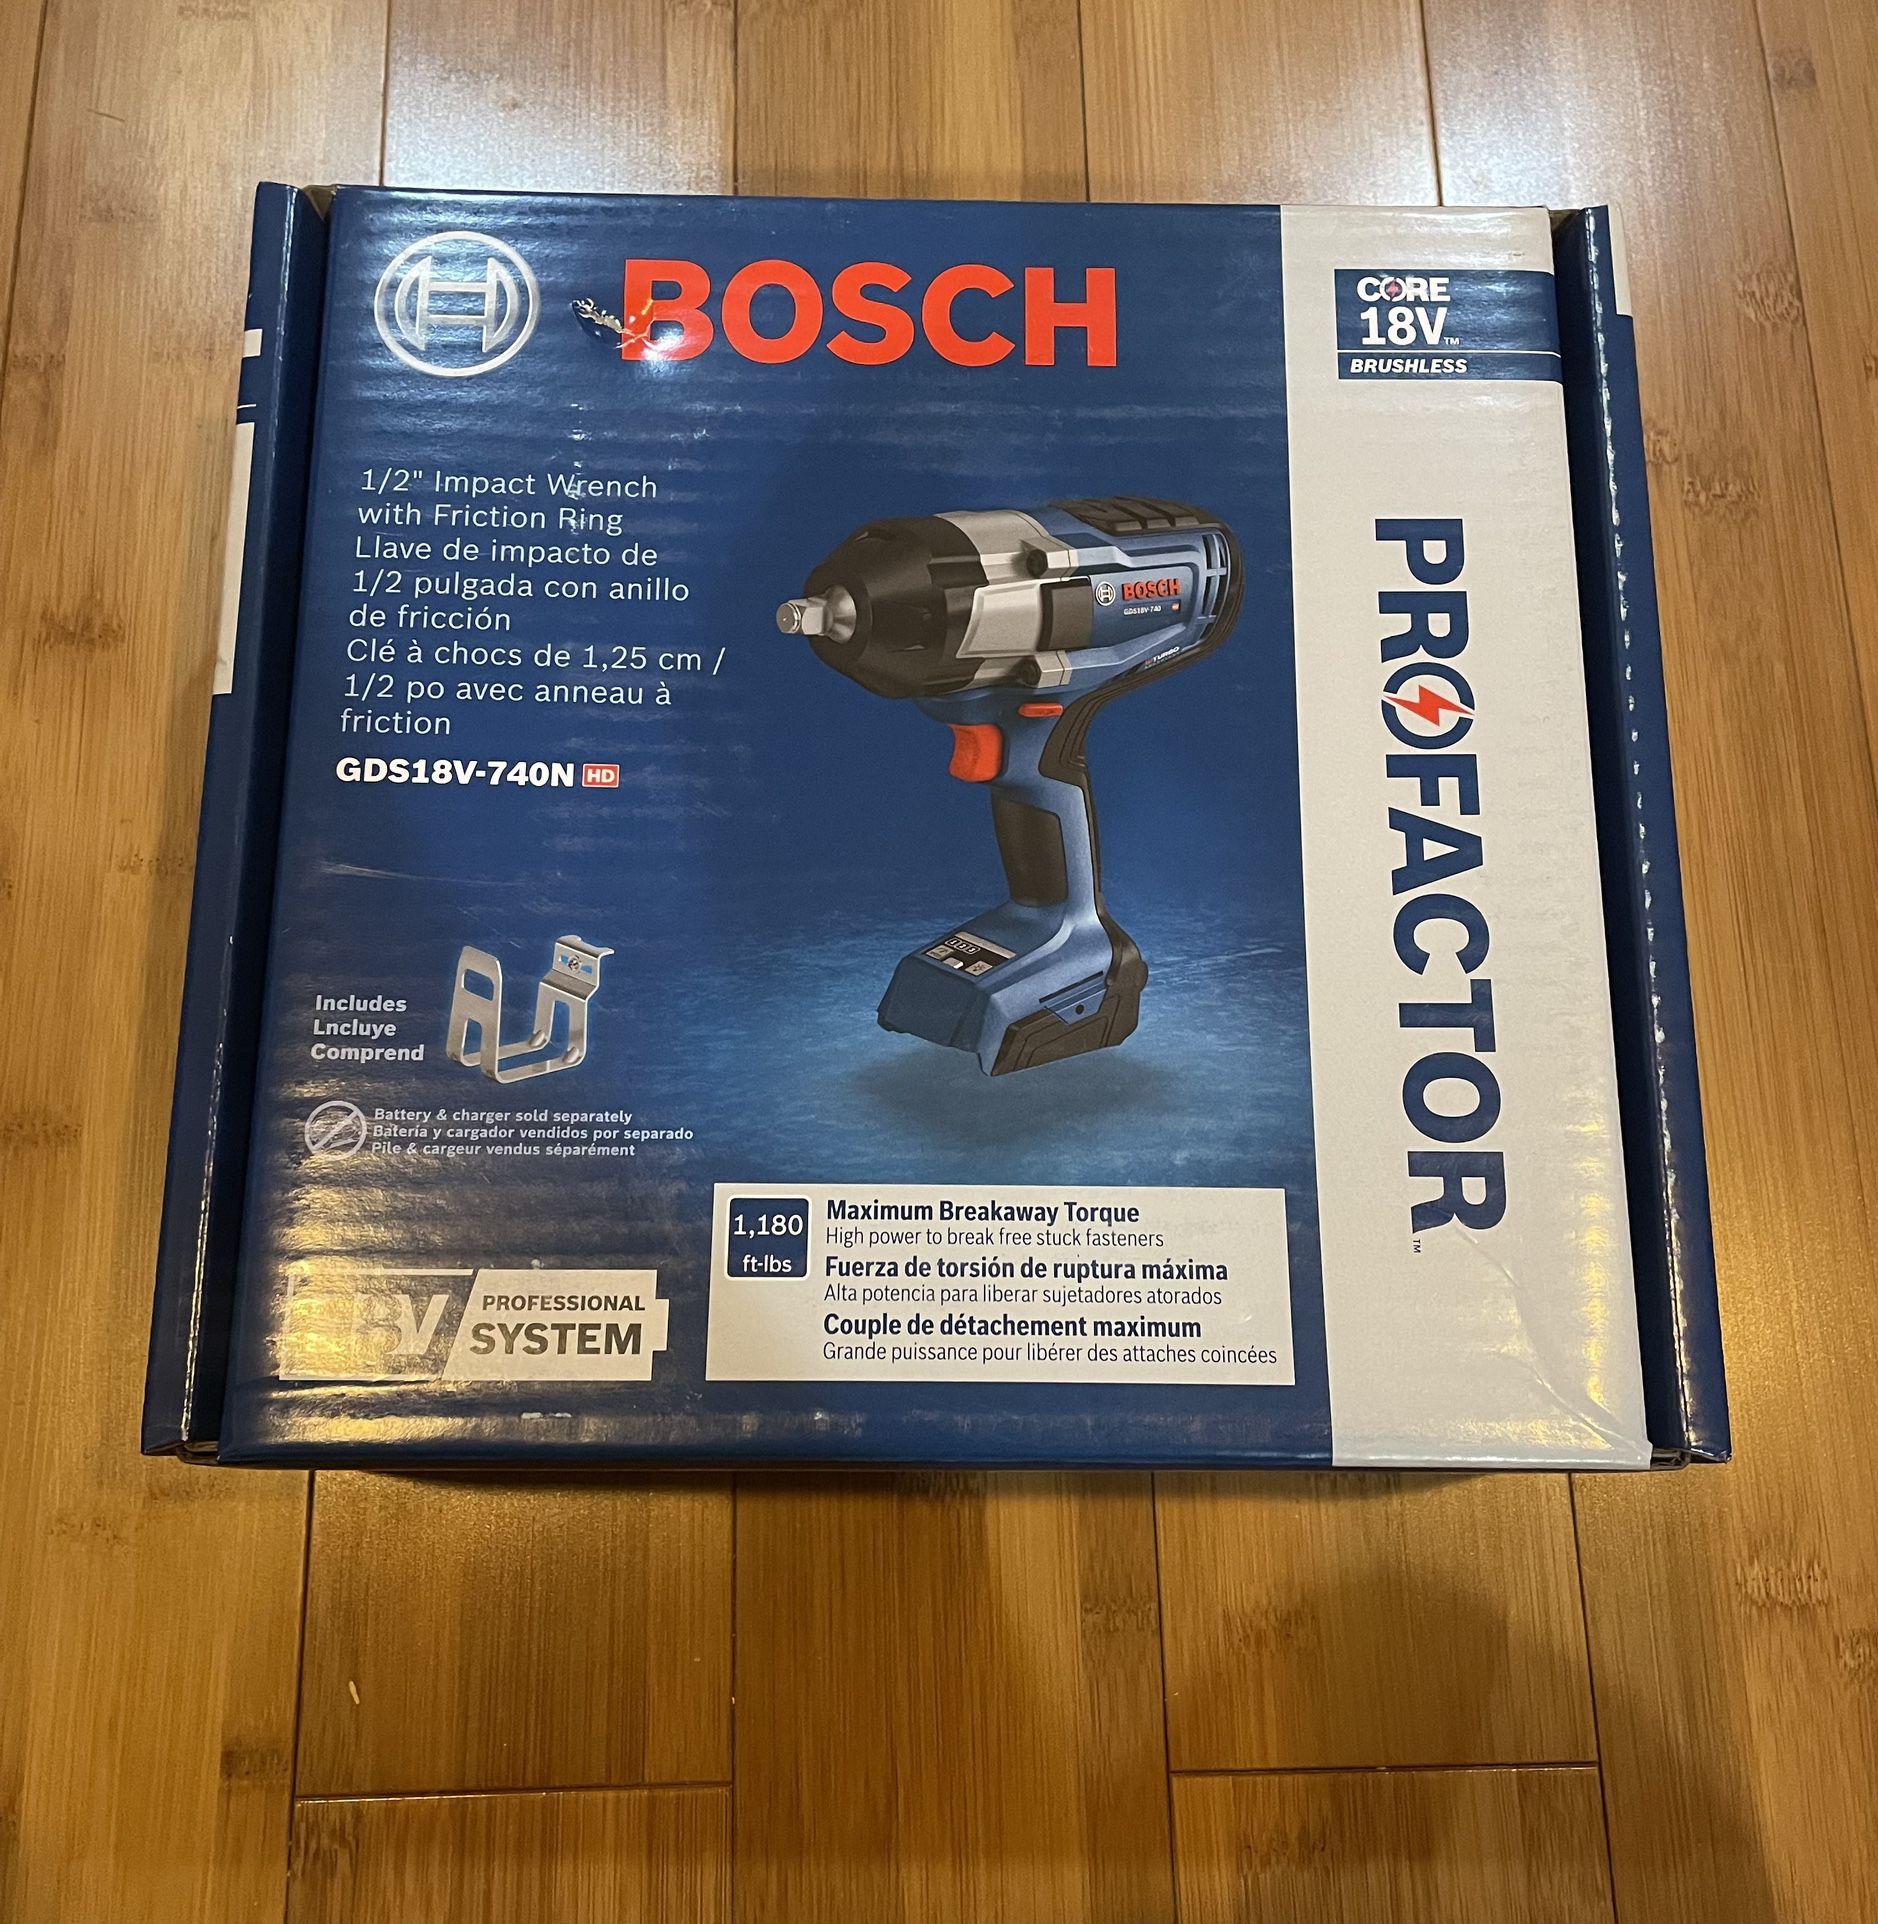 Bosch 18v ProFactor Brushless High Torque 1/2” Impact Wrench